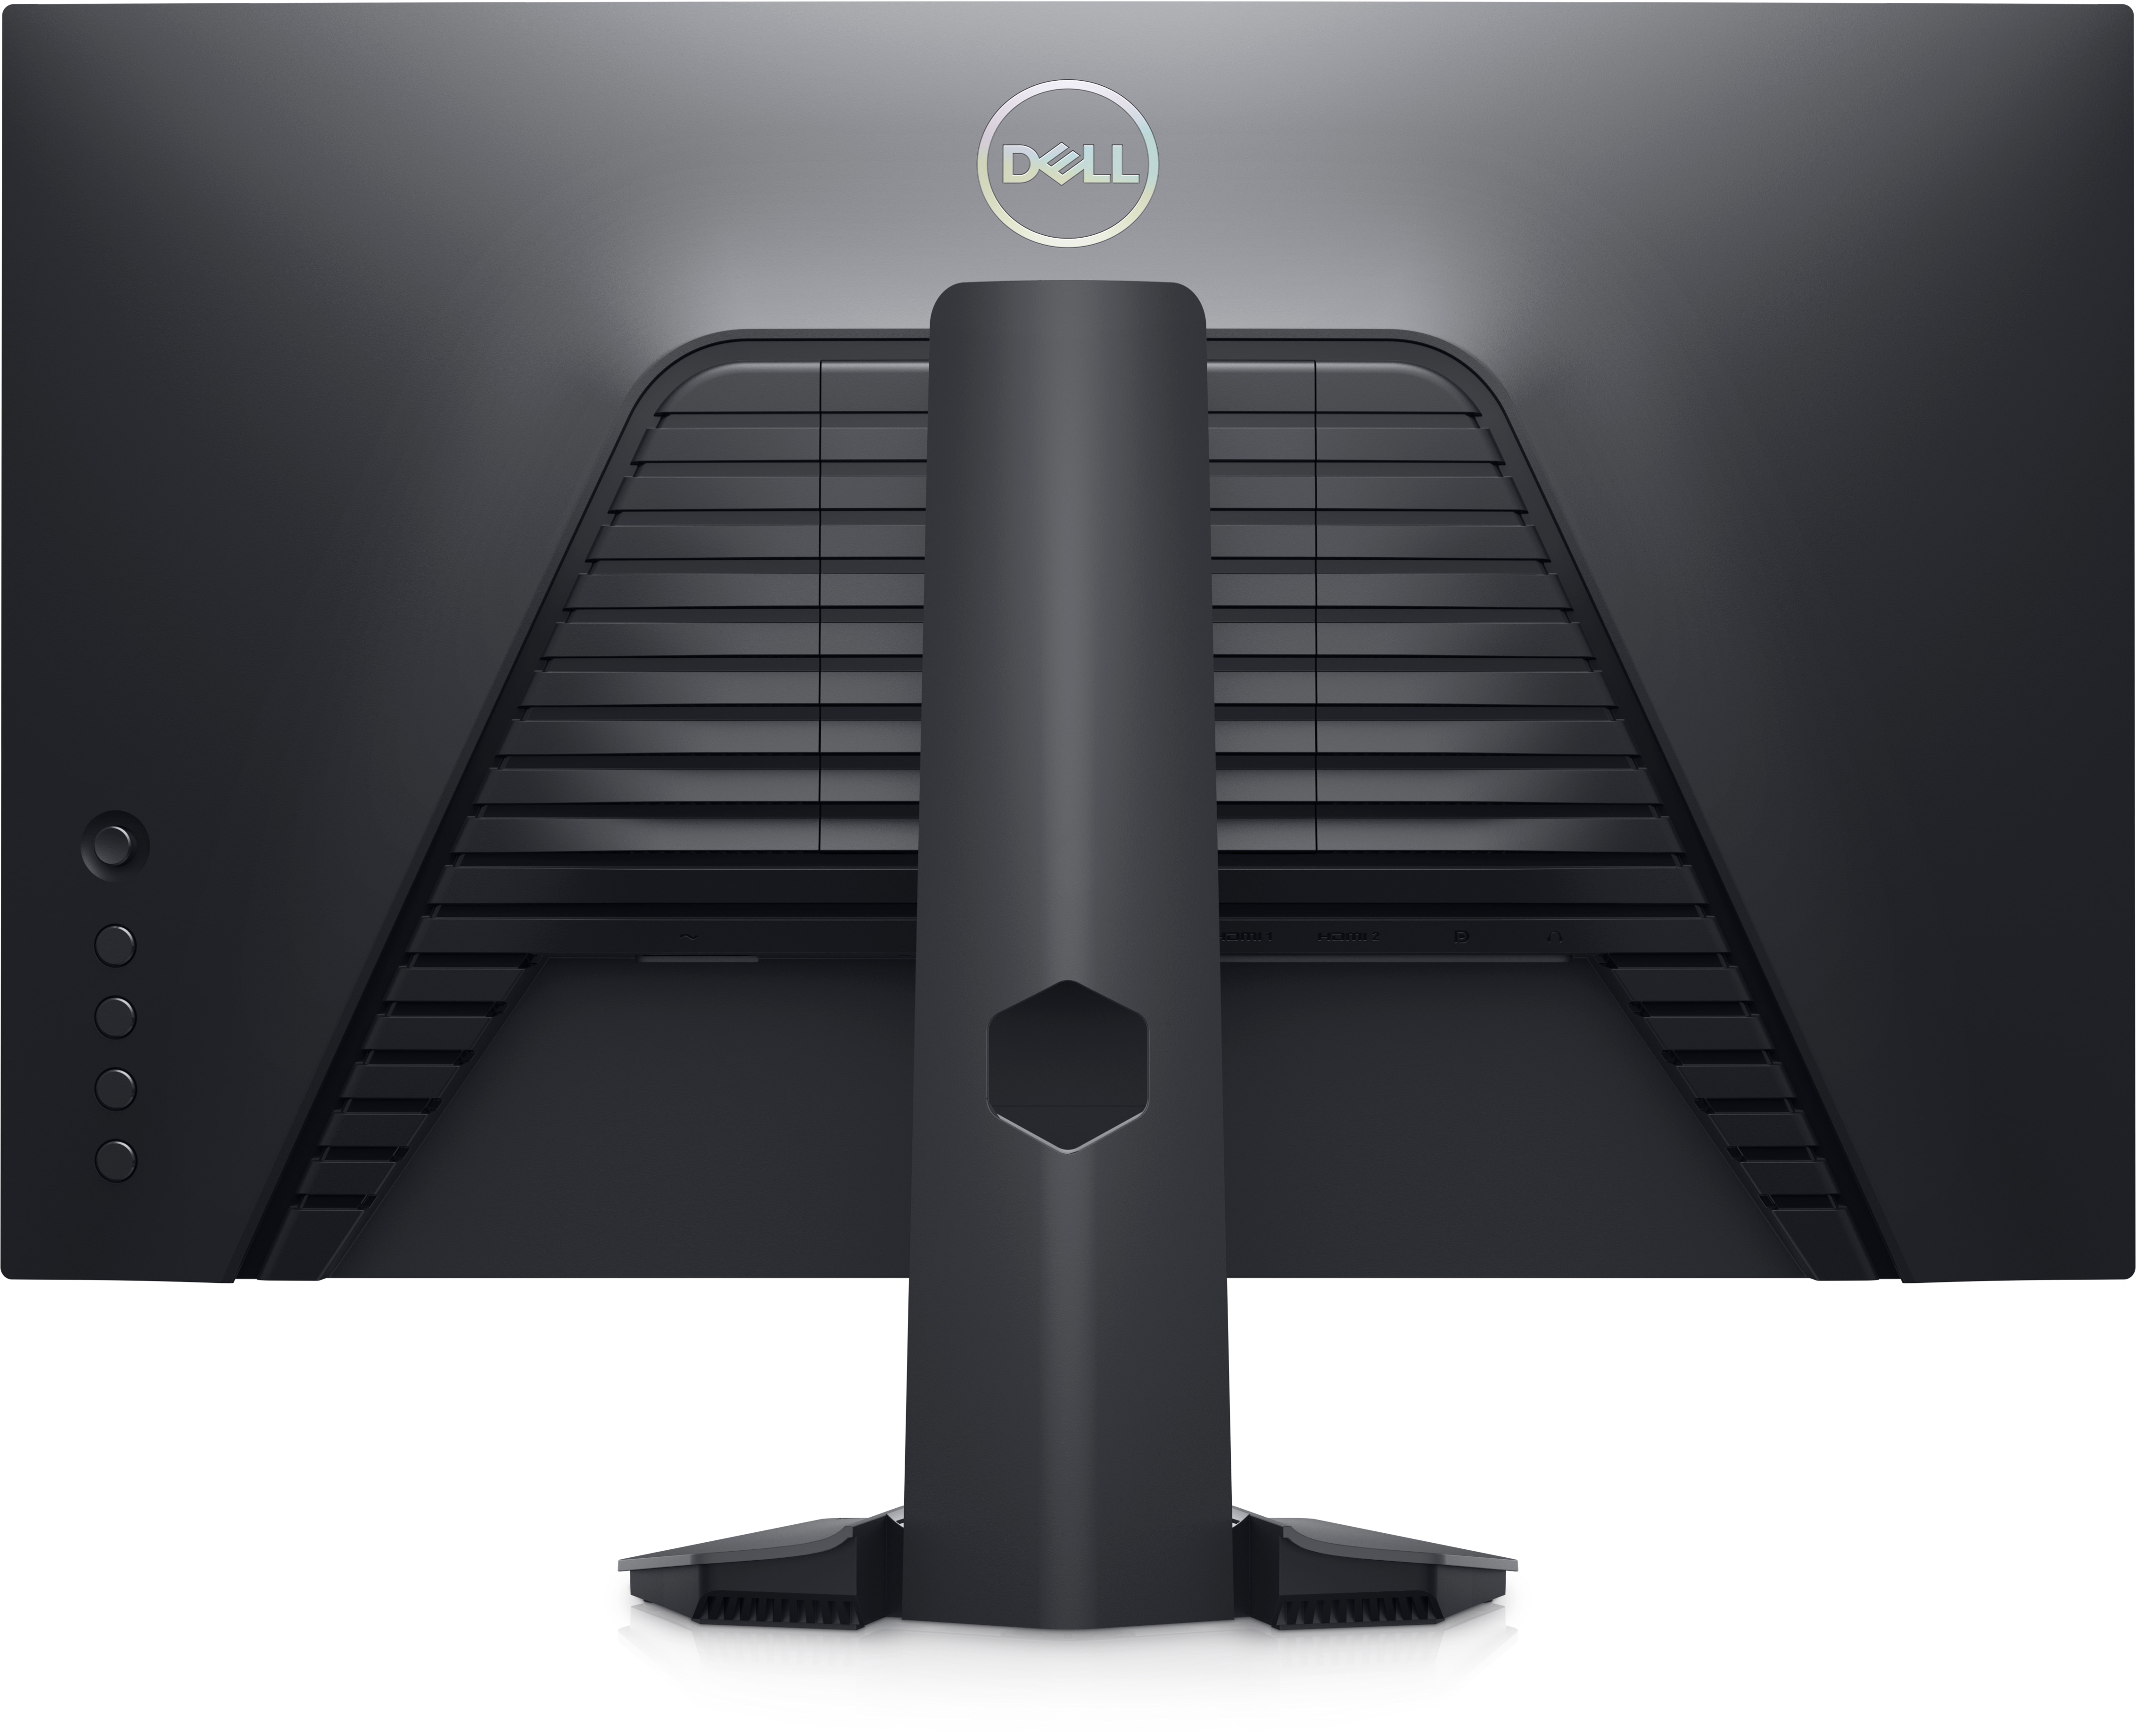 Dell 24 Inch Gaming Monitor - G2422HS : Computer Monitors | Dell UK